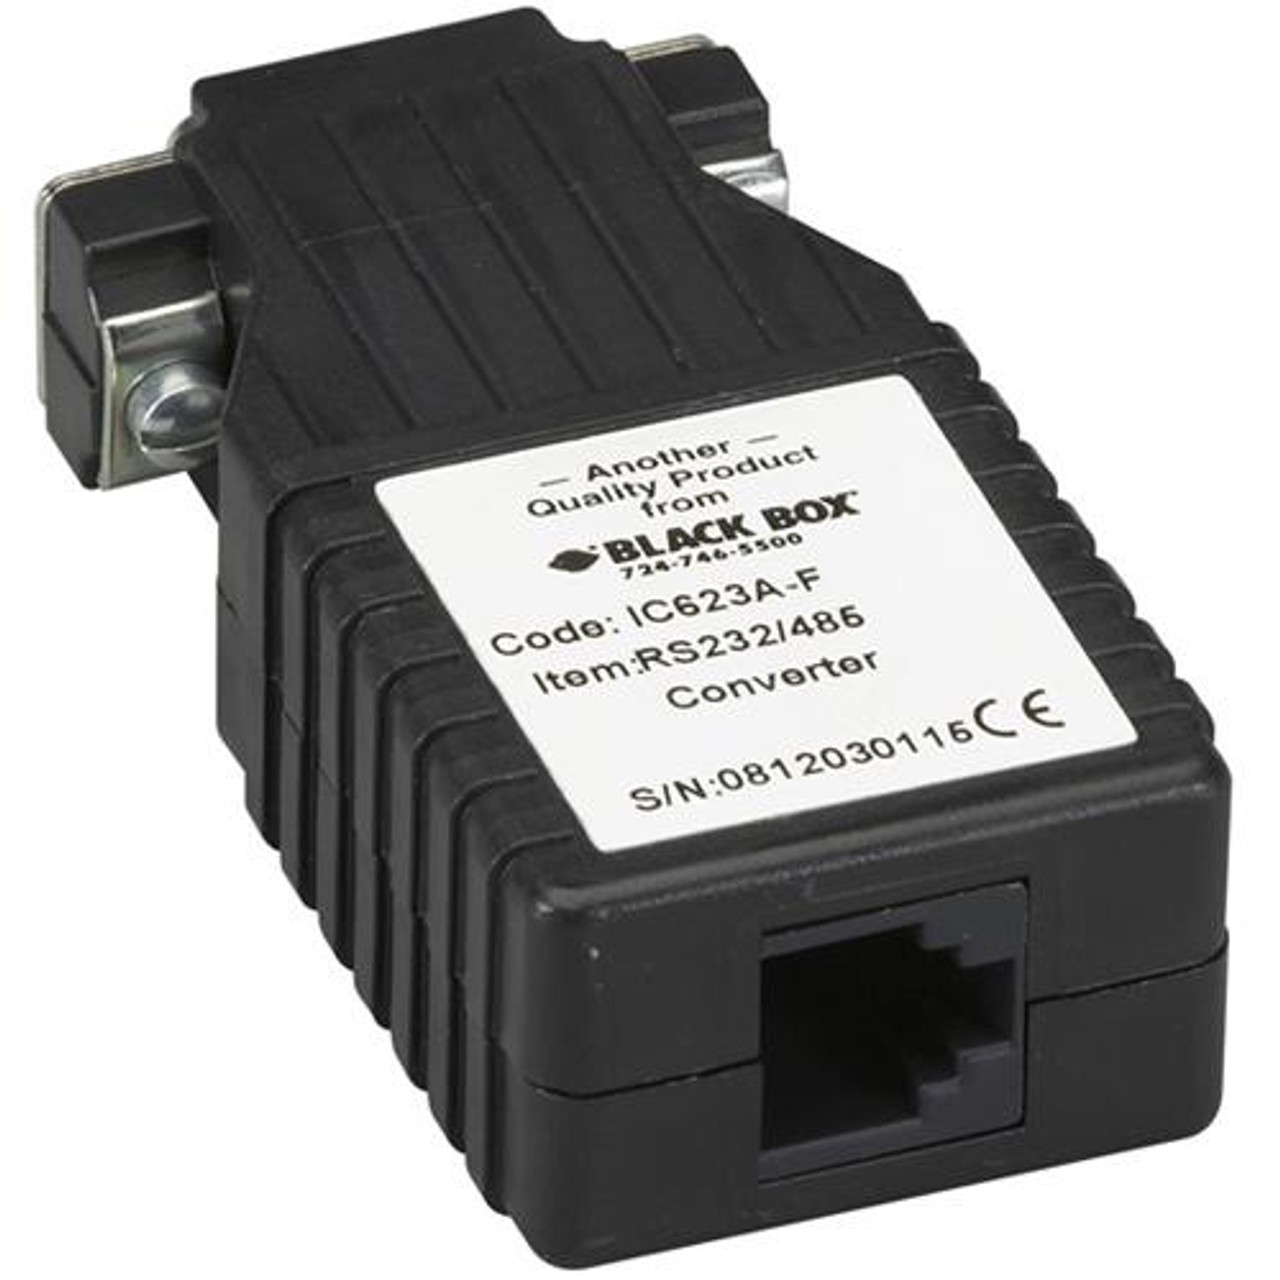 IC623A-F Black Box RS-232/485 Converter 1 x DB-9 RS-232 1 x RJ-11 RS-485 External 24 km